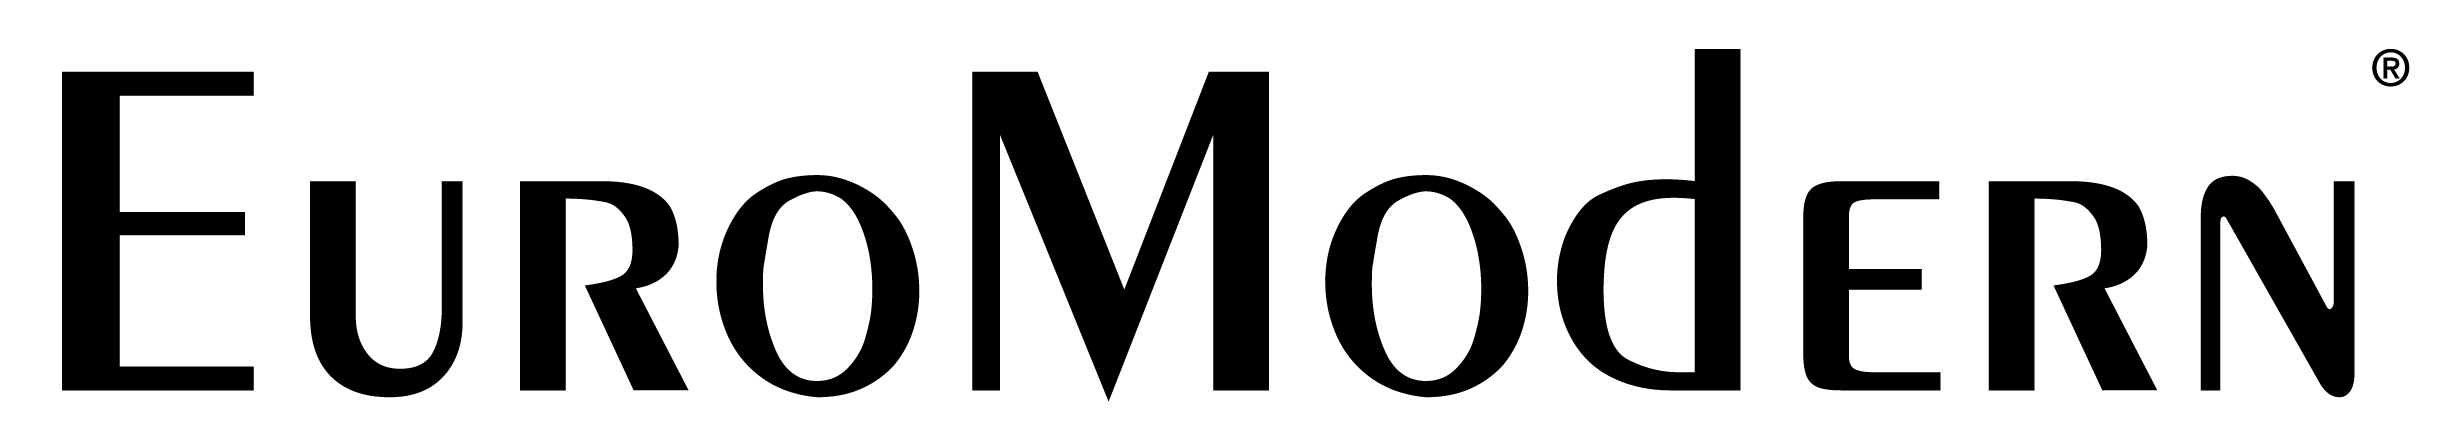 euro_modern_logo-01